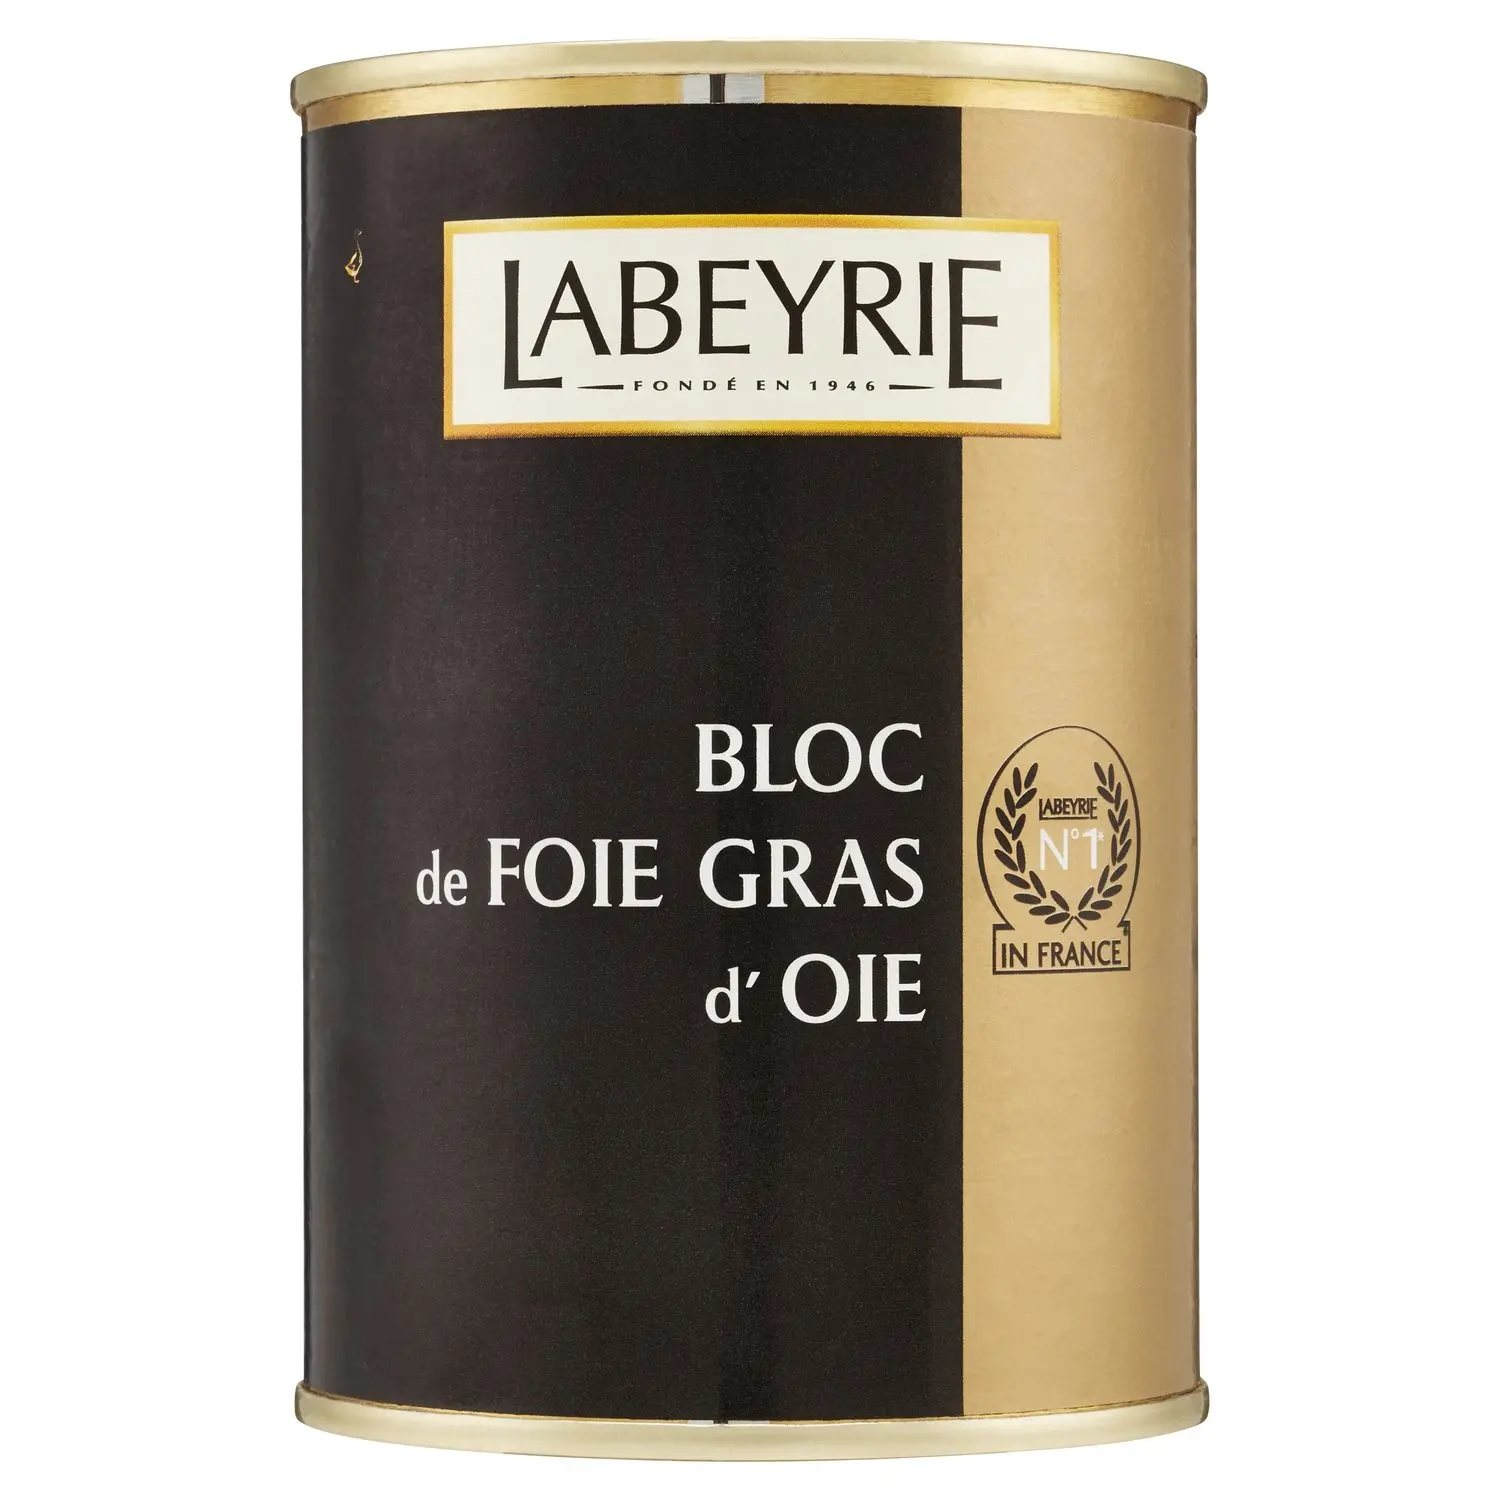 Foie gras Labeyrie Maman Tambouille !